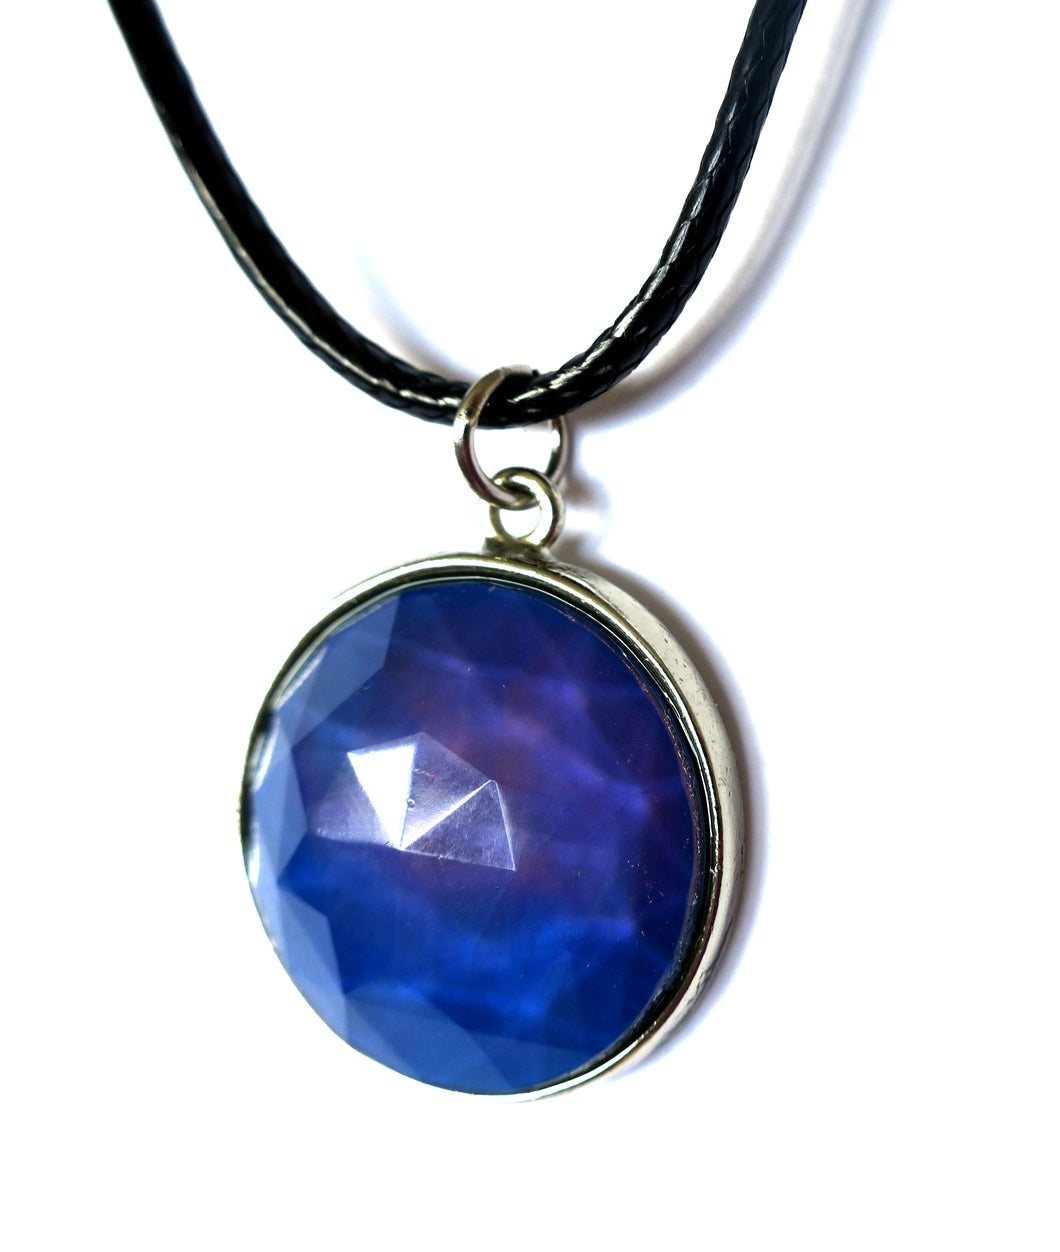 circular mood pendant necklace turning blue purple color